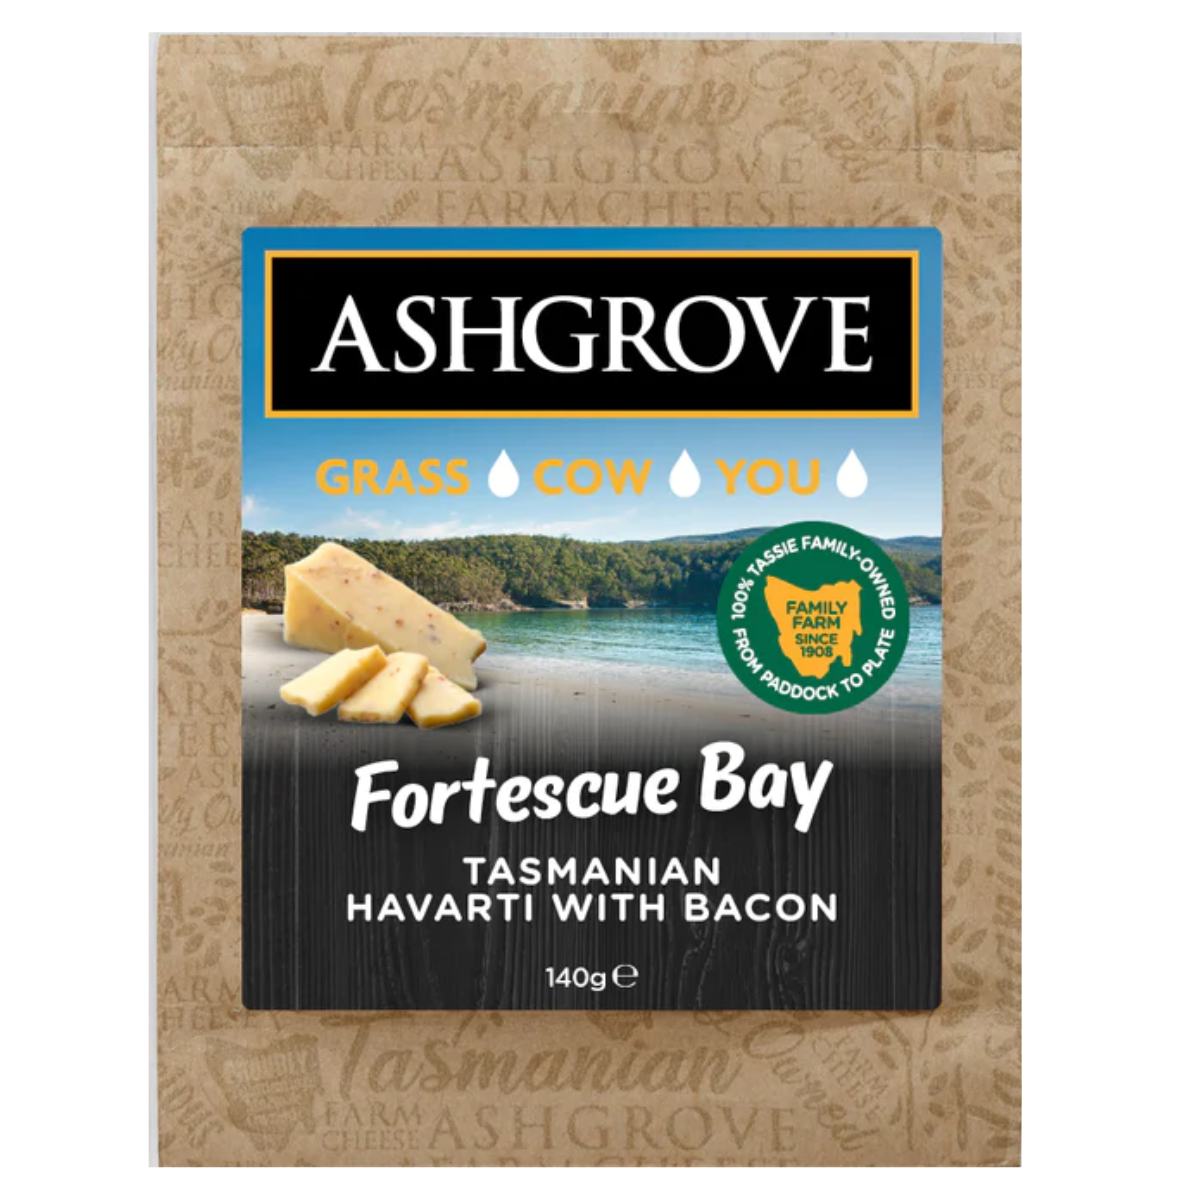 Ashgrove Tasmania Havarti with Bacon 140g